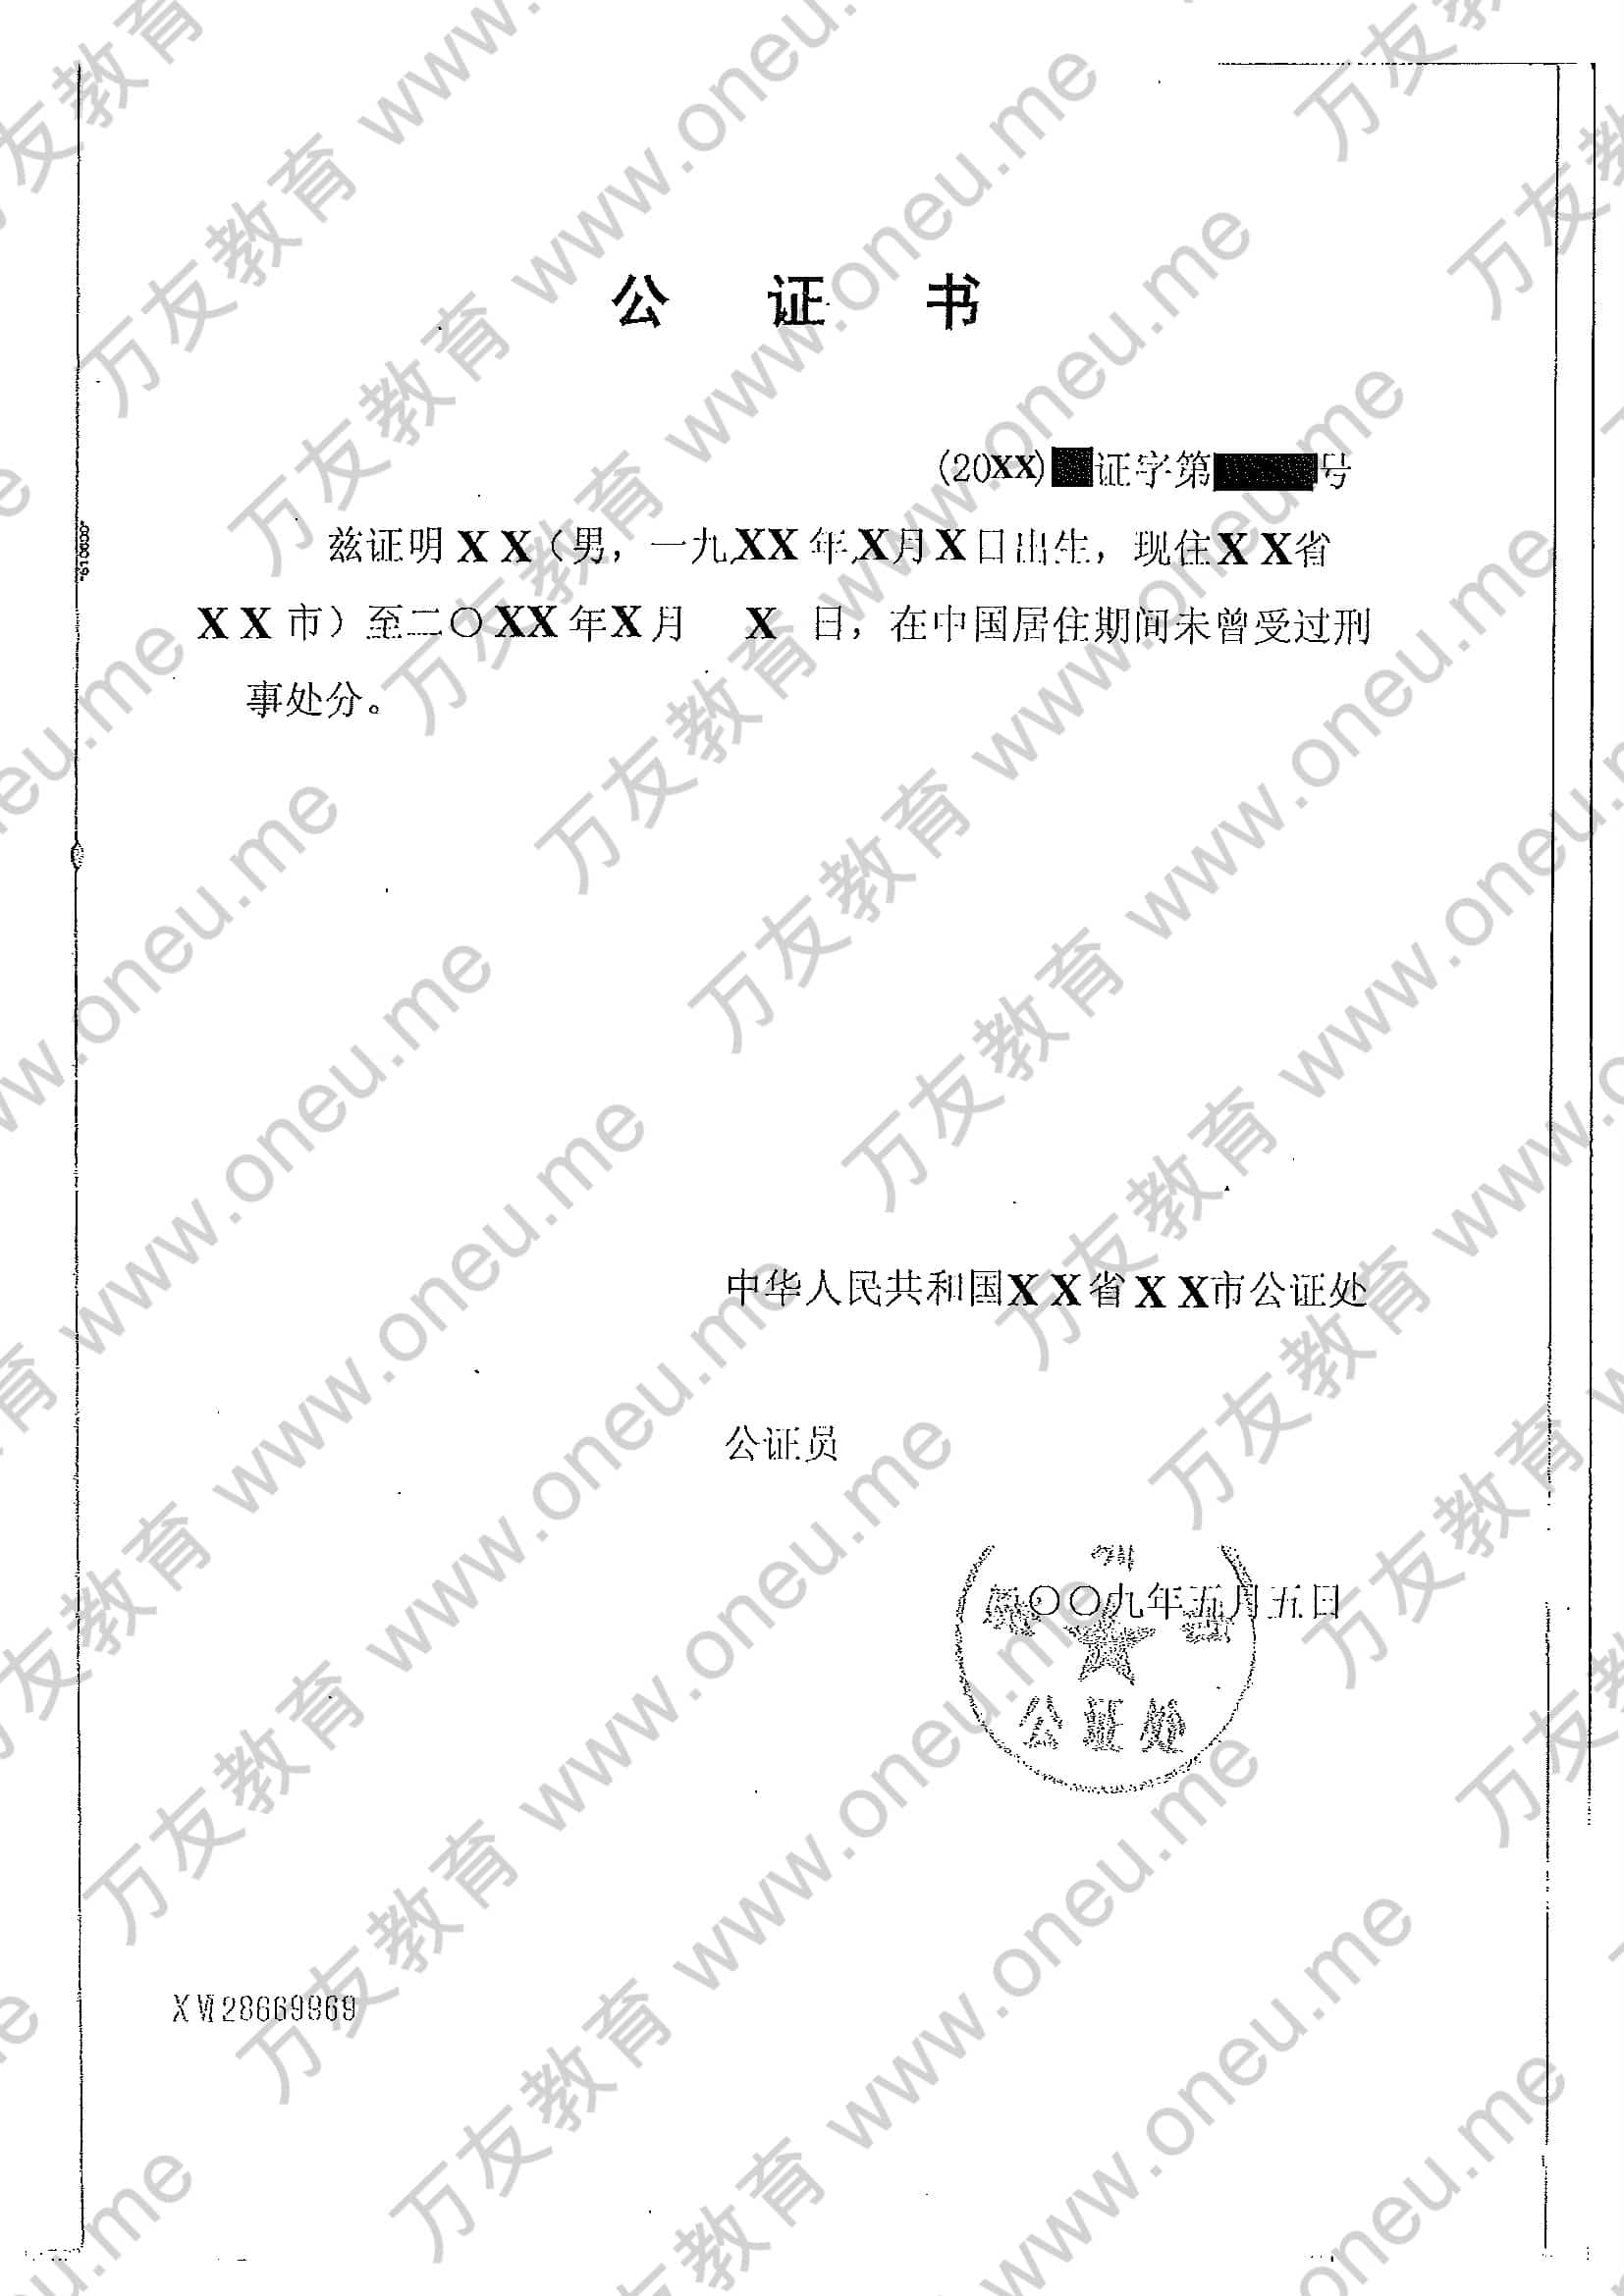 China No Criminal Certificate-中国无犯罪证明